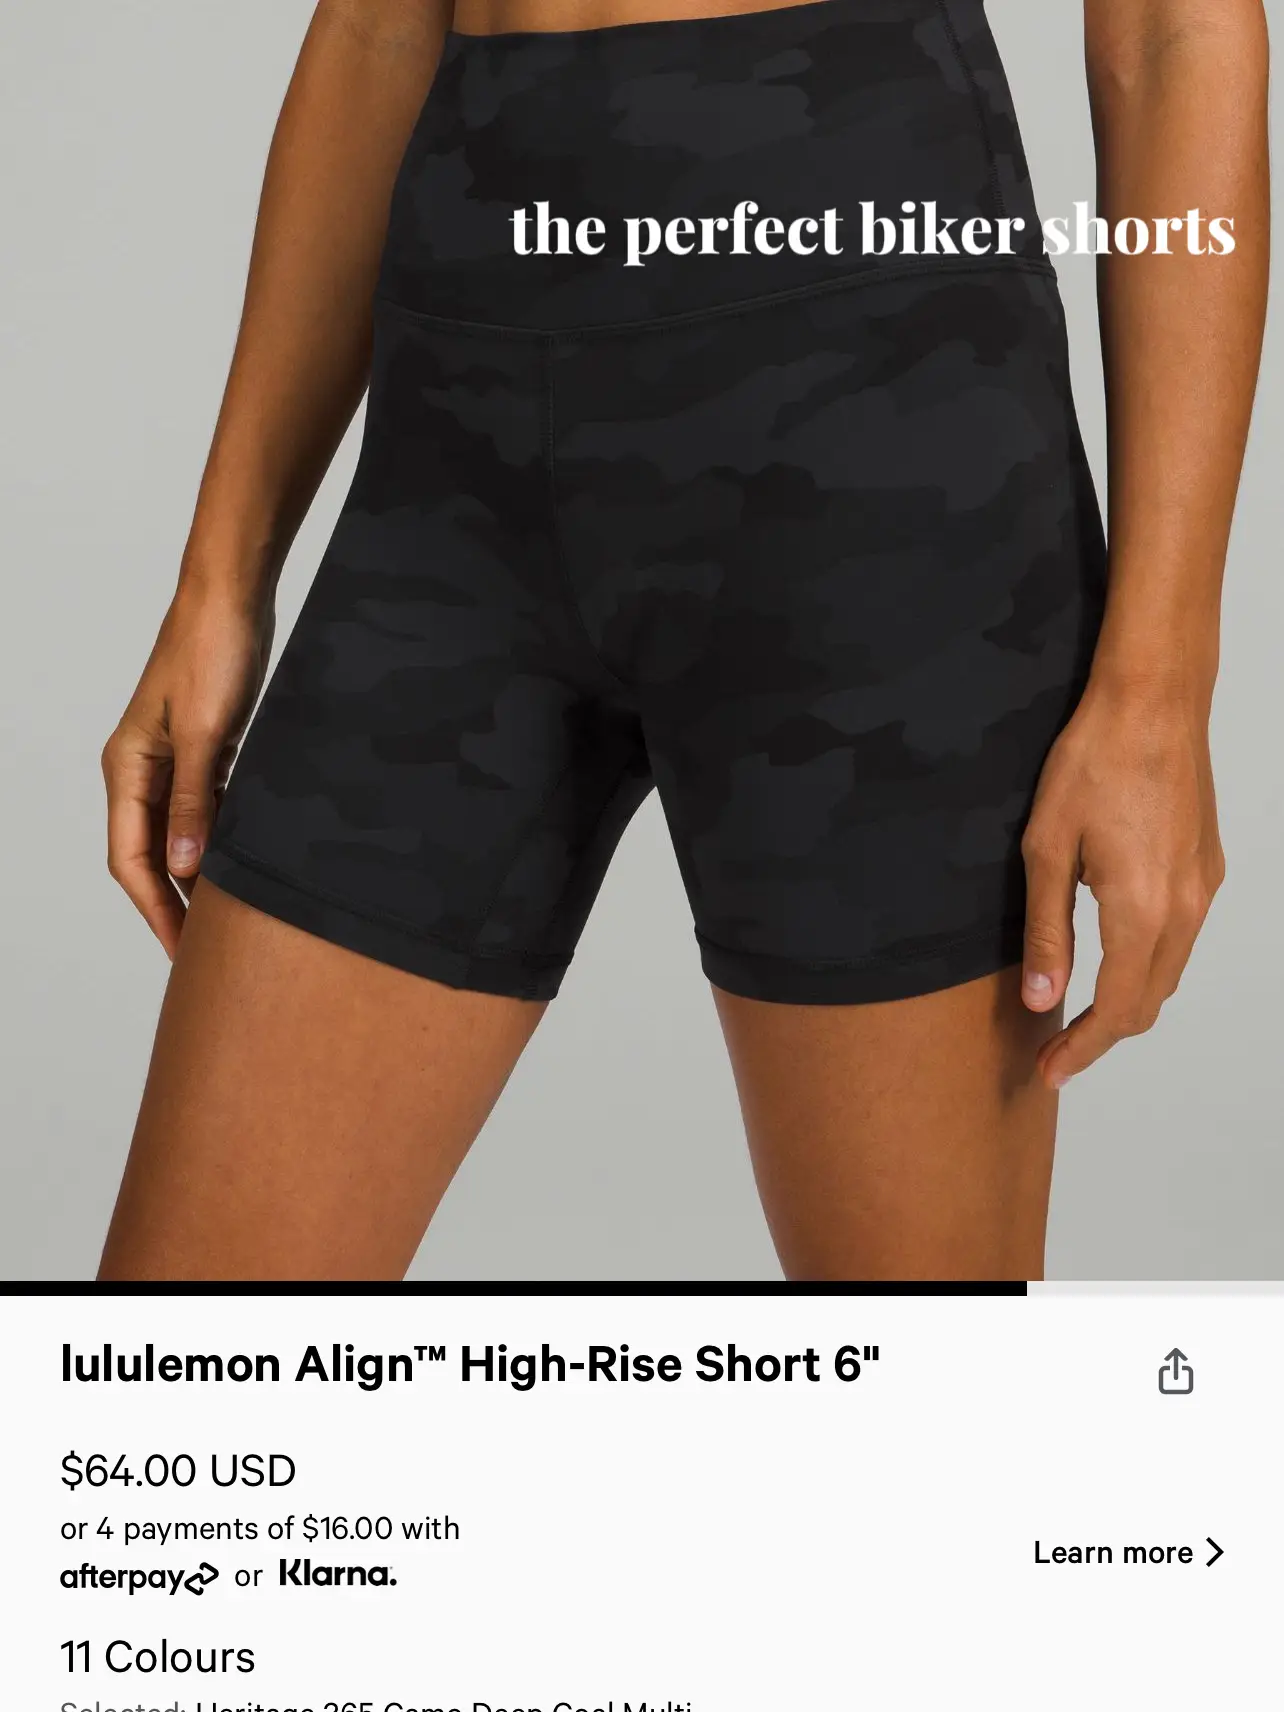 the best, most snatched, buttery softest lululemon biker shorts dupe i